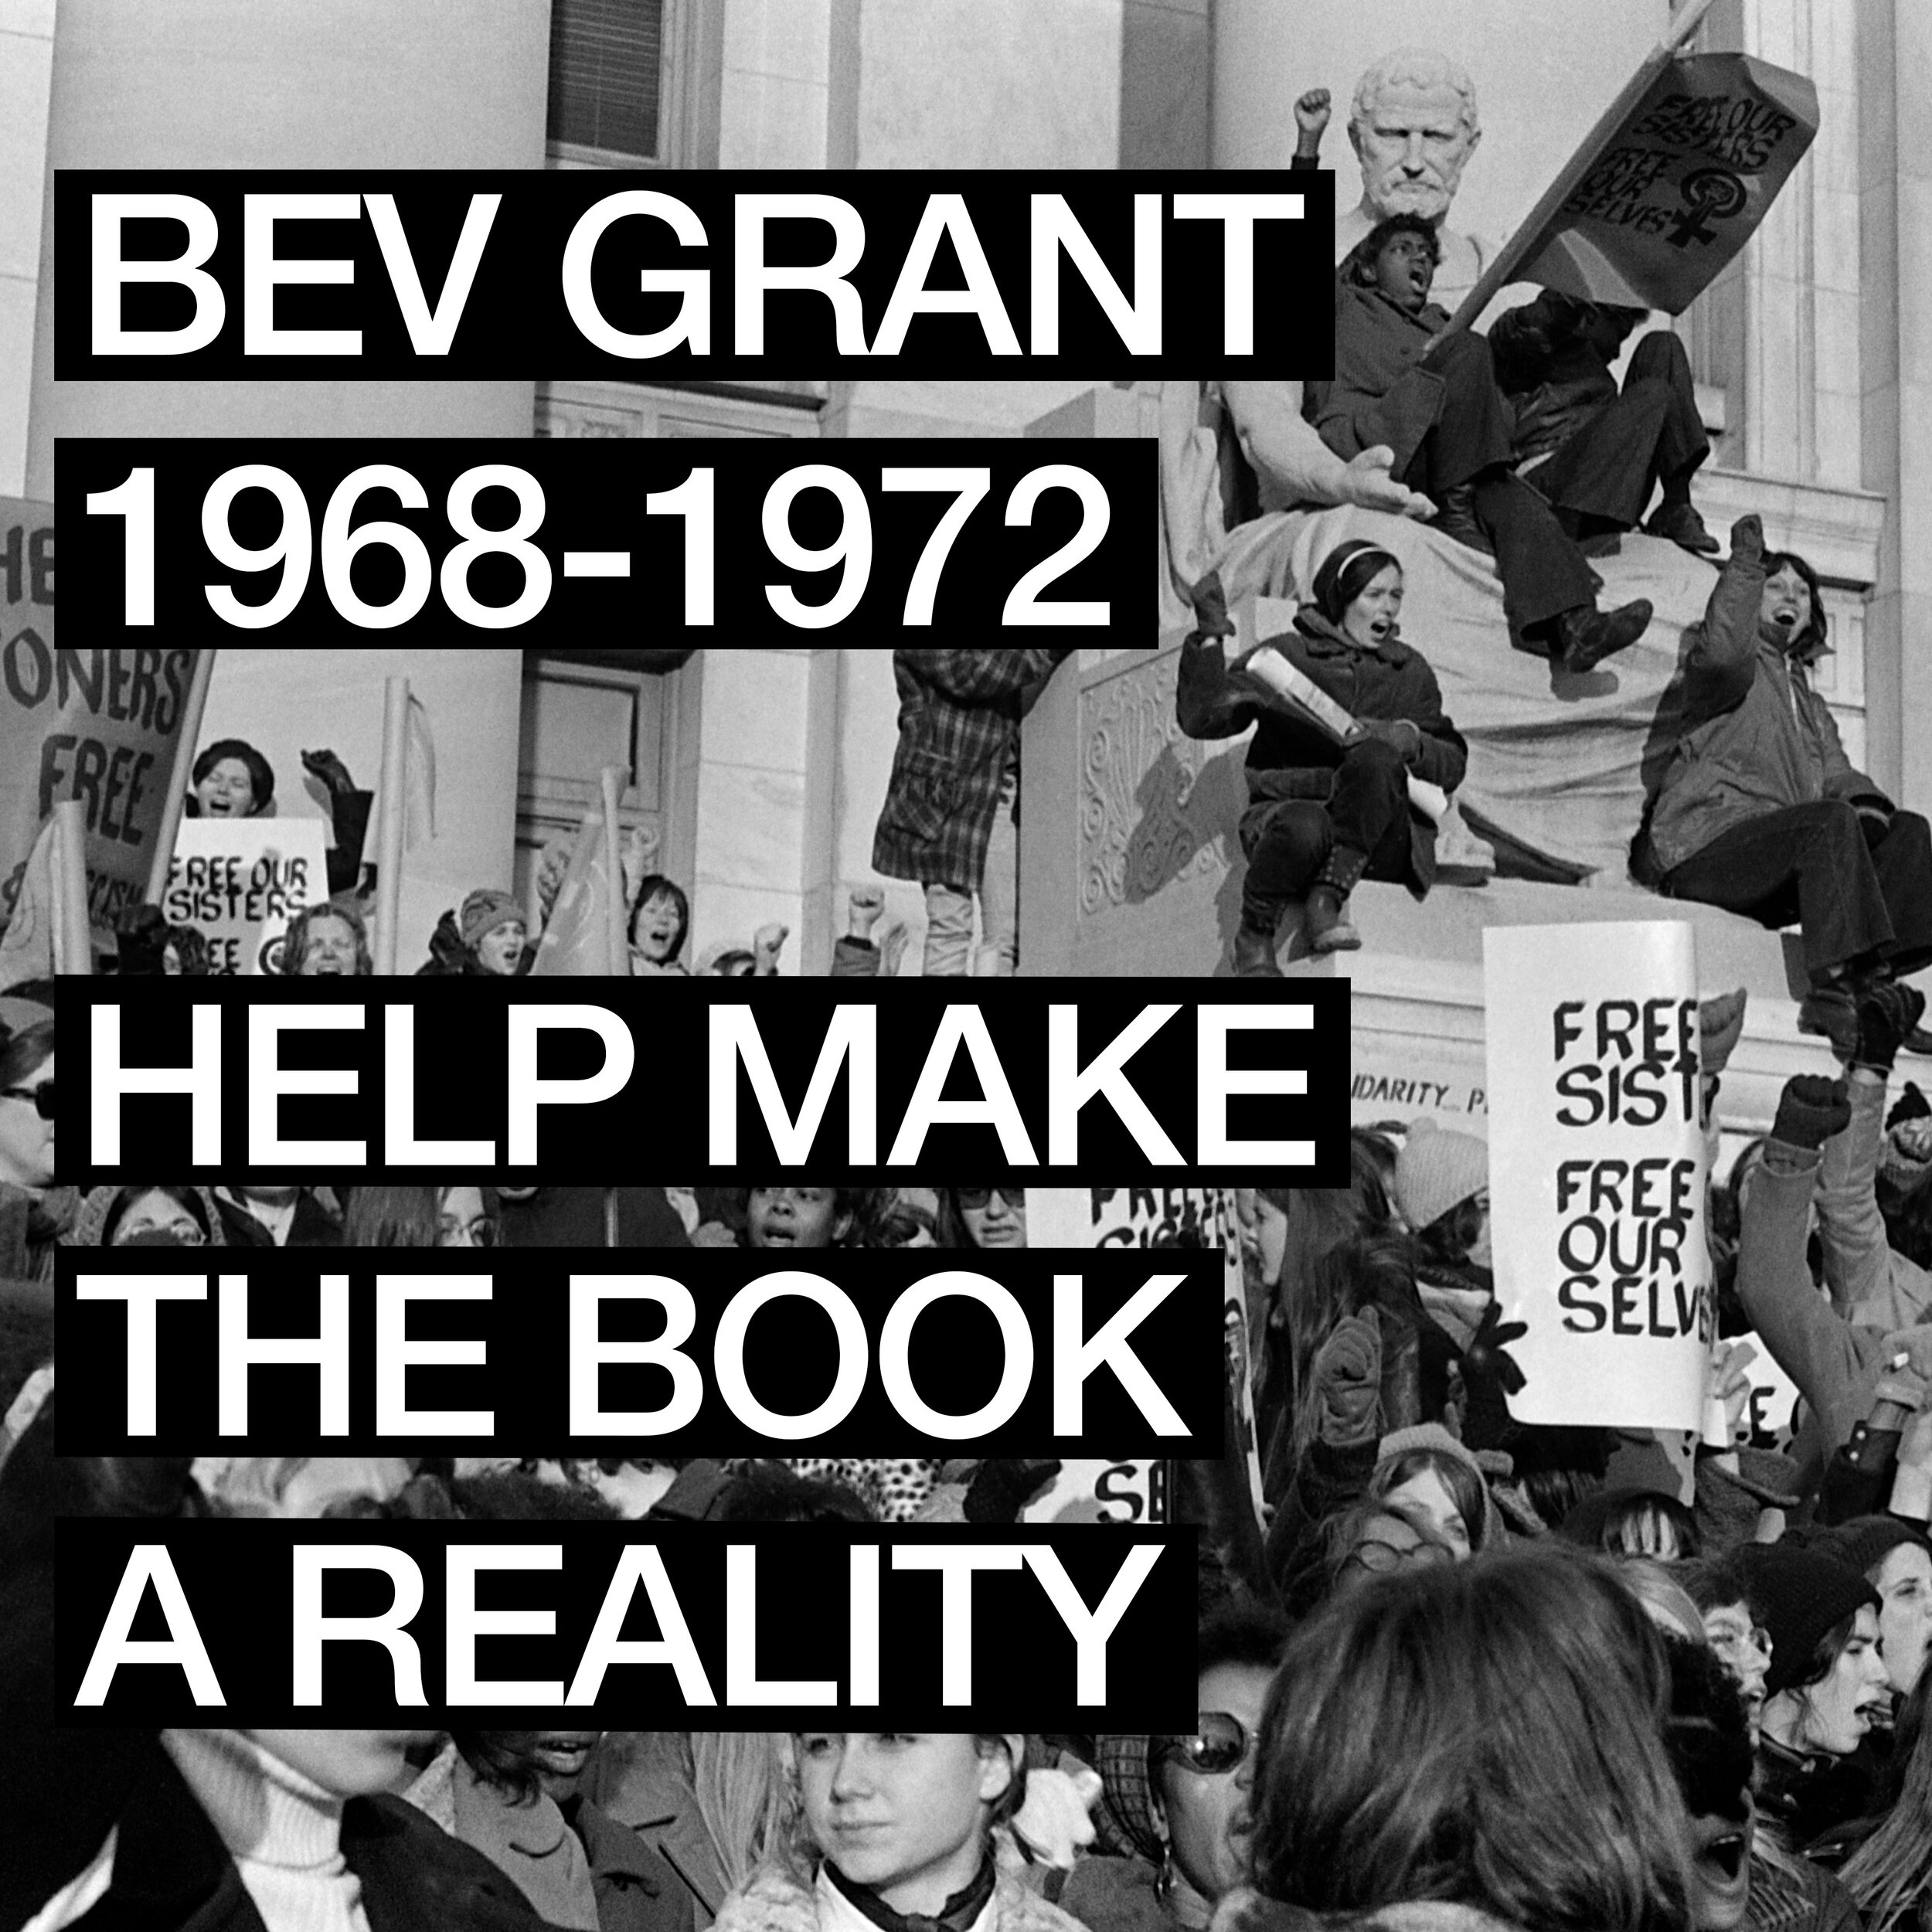 Bev Grant: Photographs 1968-1972